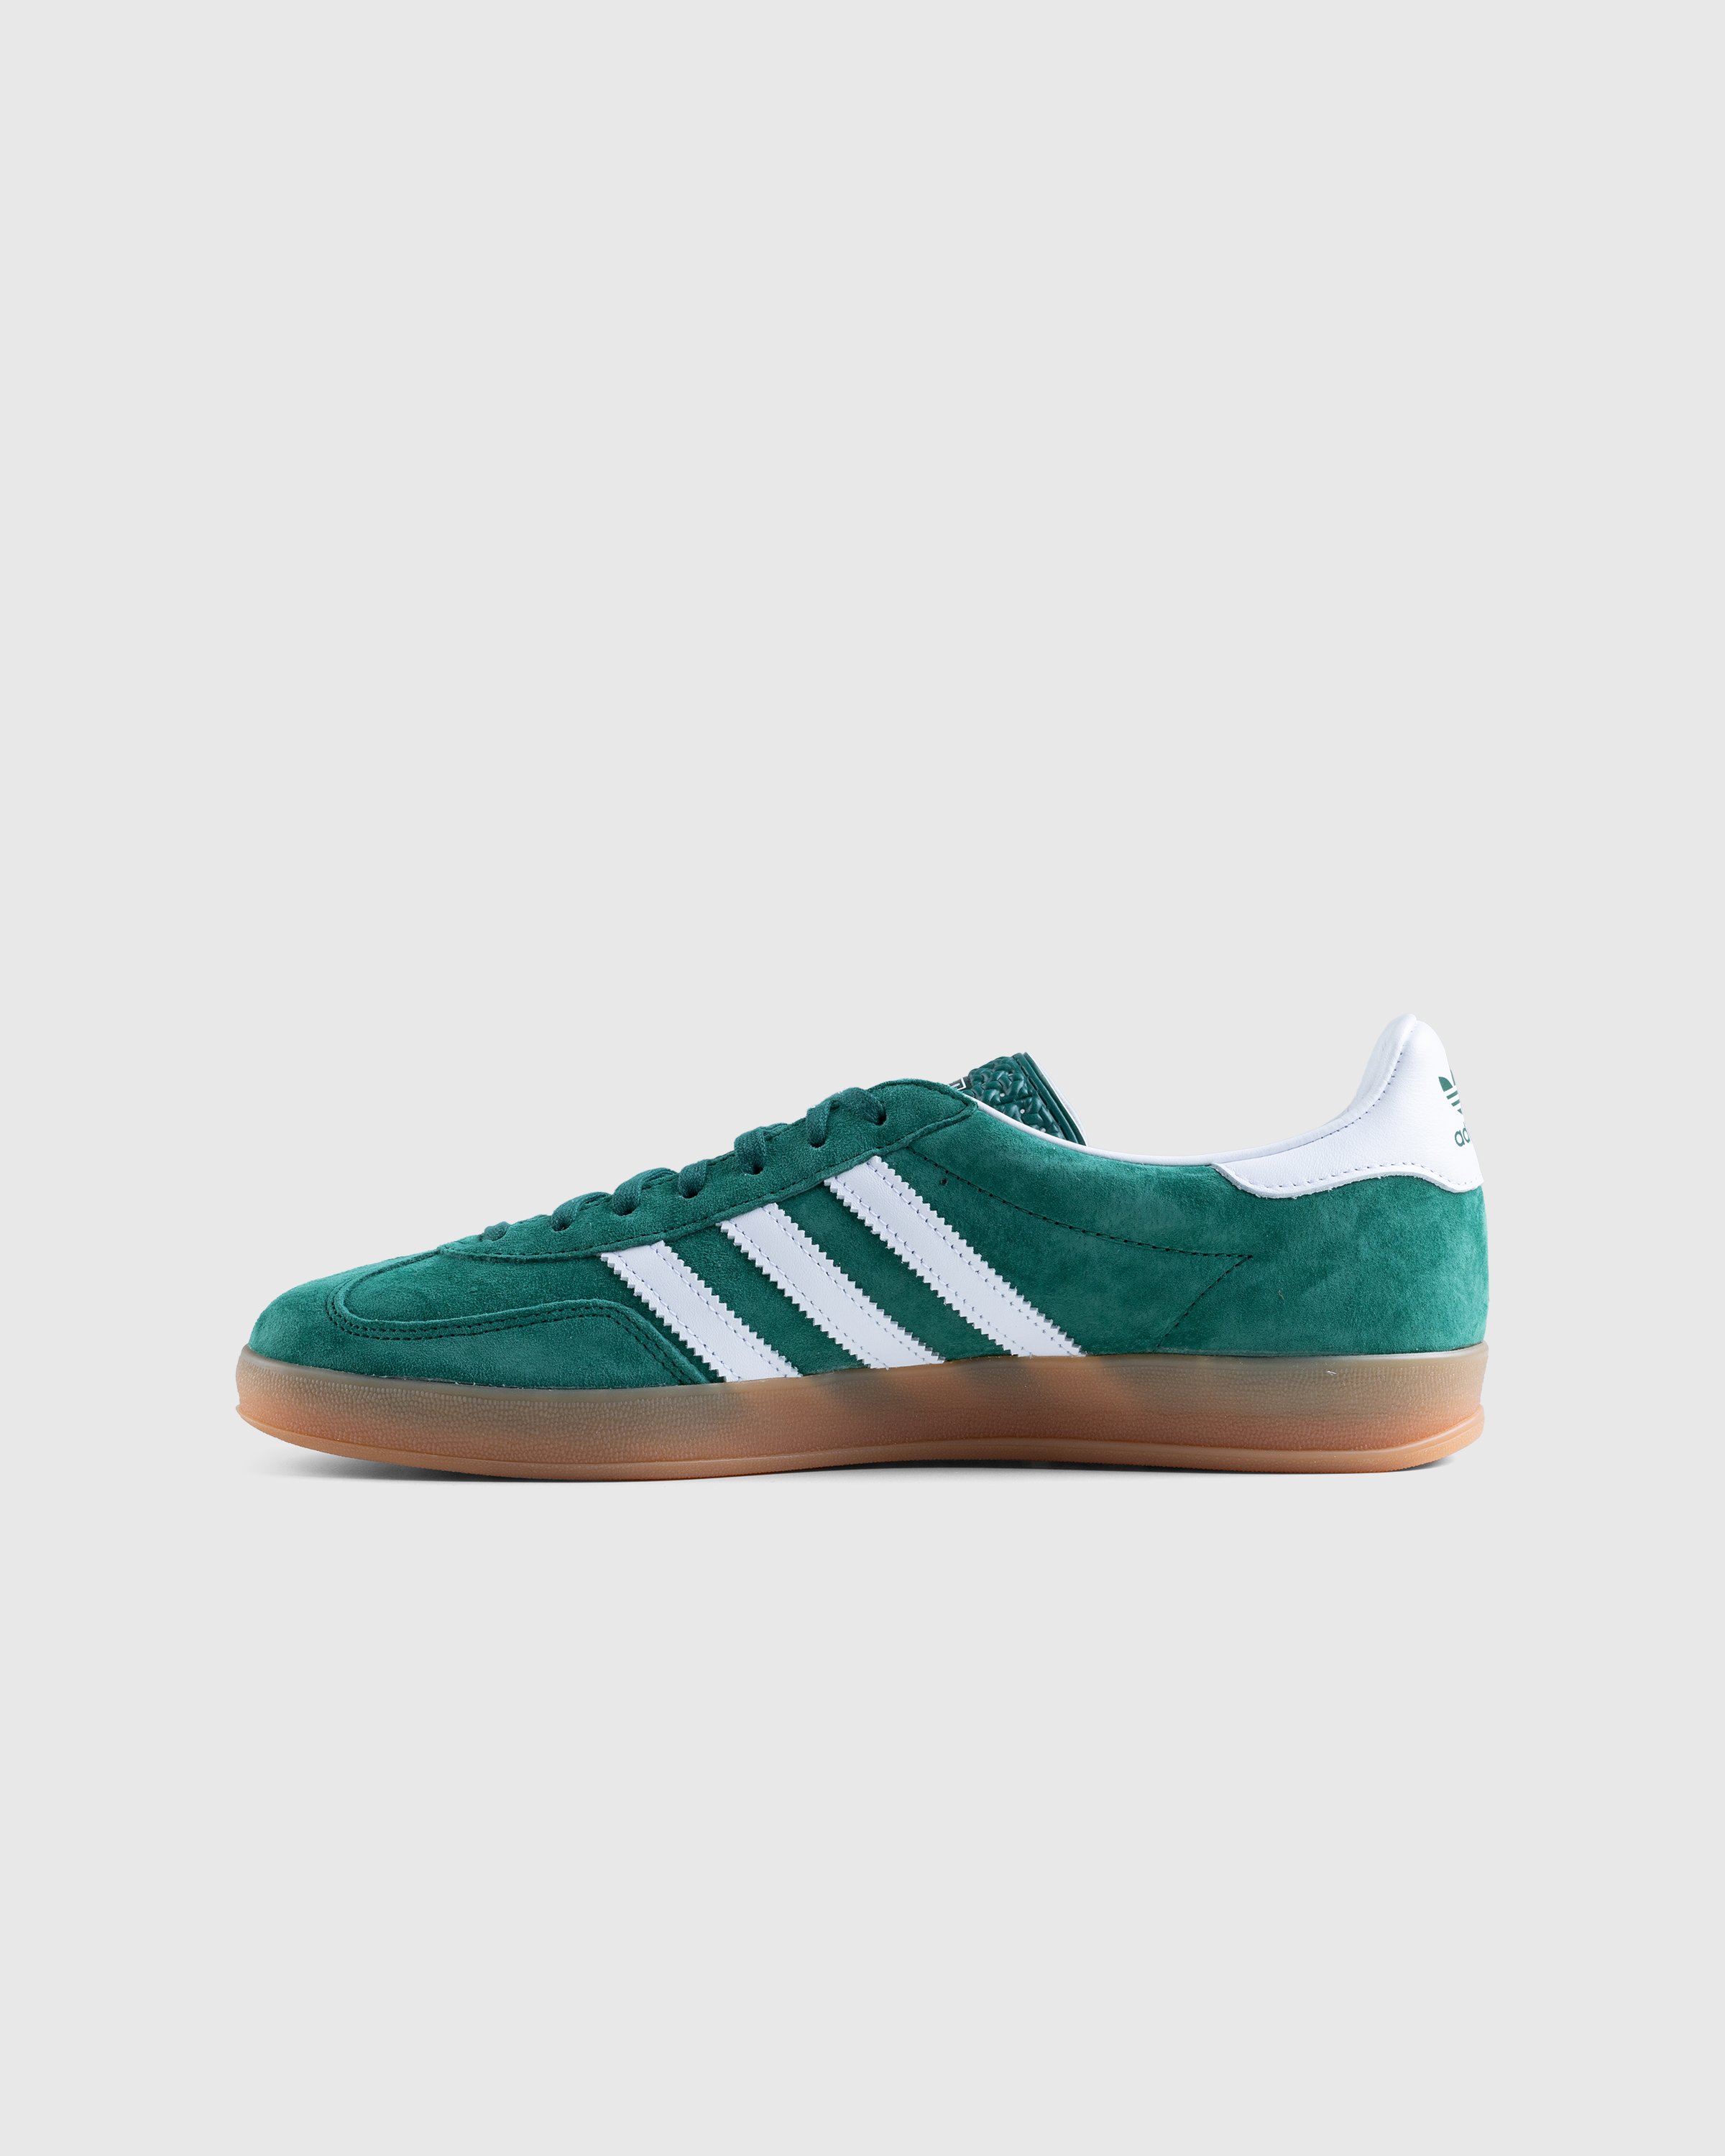 Adidas - Gazelle Indoor Collegiate Green - Footwear - Green - Image 2